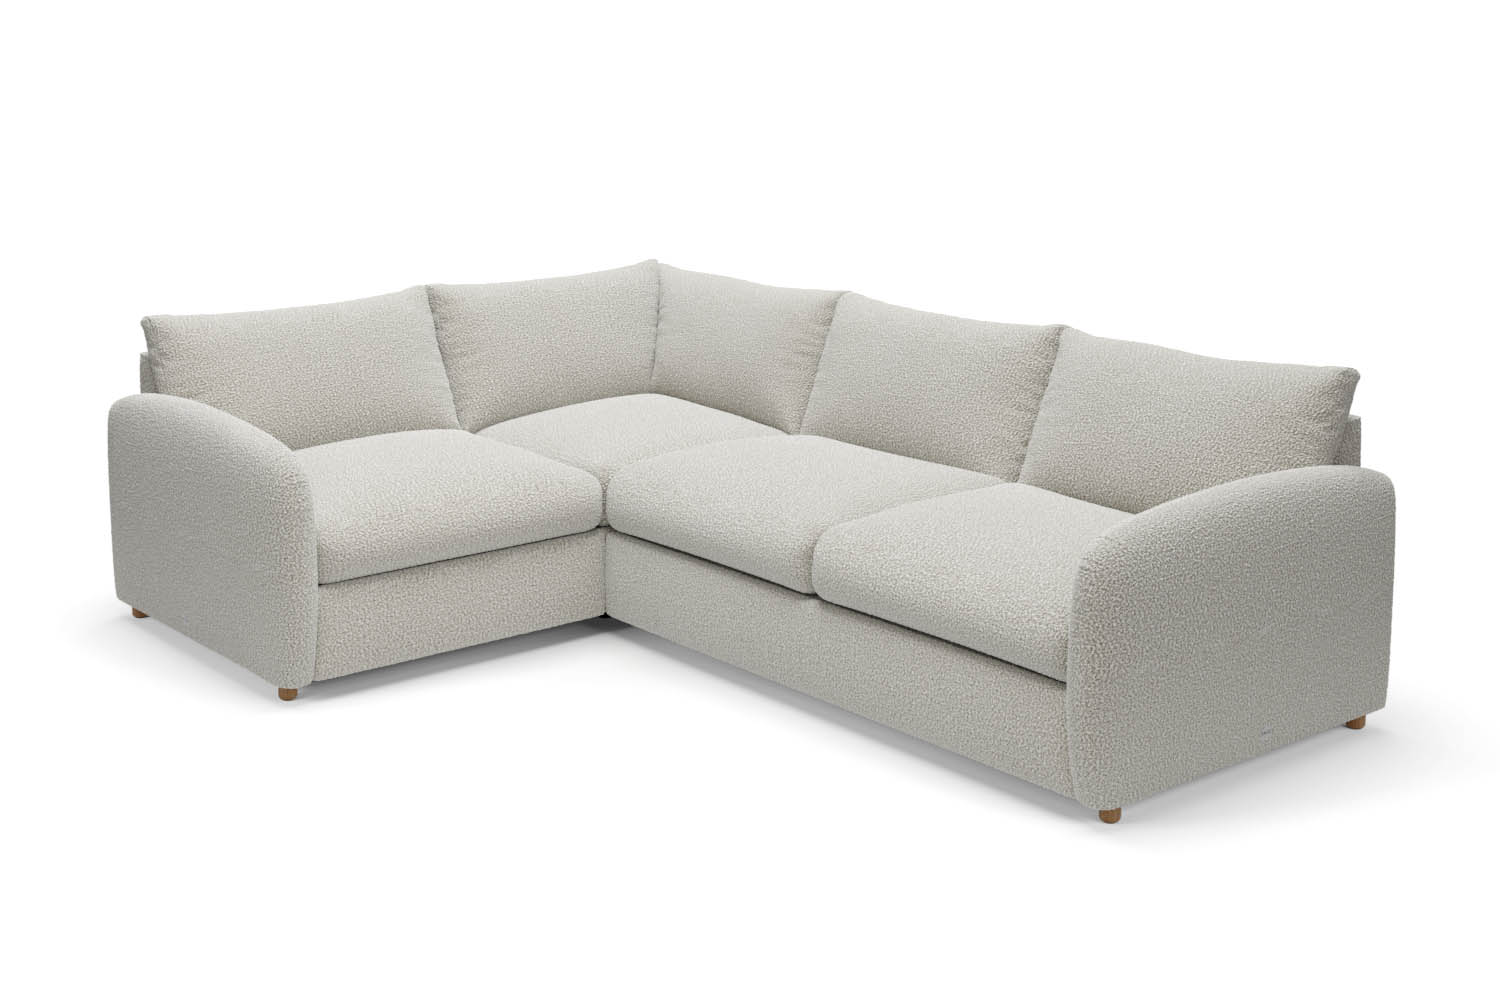 The Small Biggie - Medium Corner Sofa - Fuzzy White Boucle